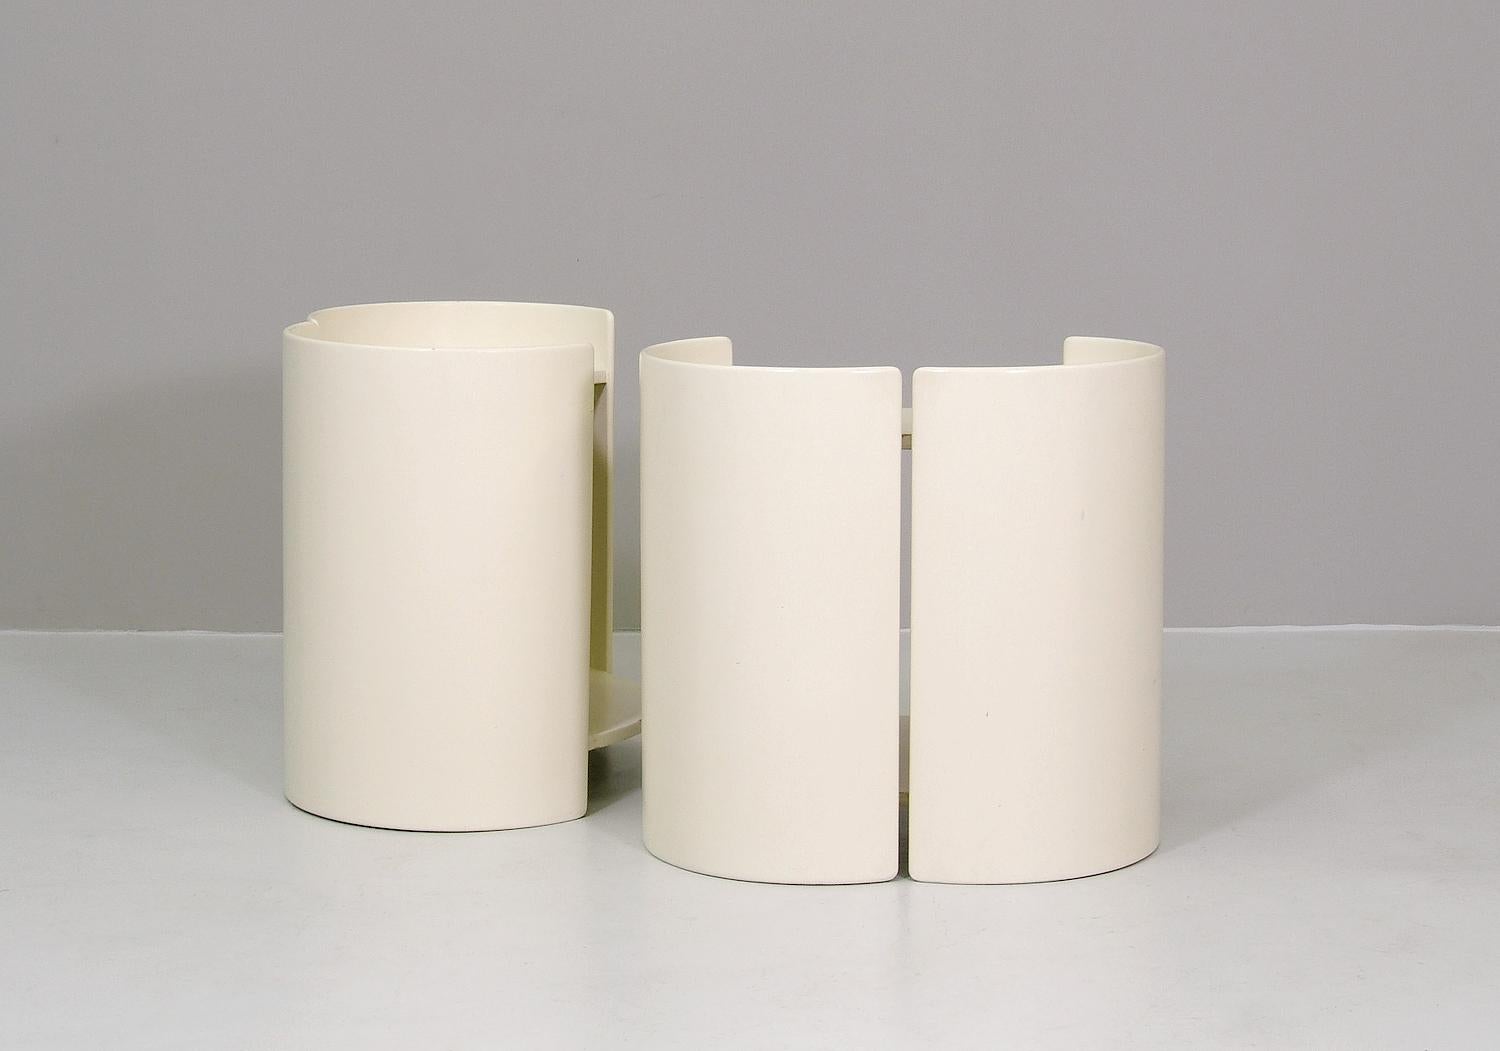 Two side table, model 'GEA' made of w
white lacquered layered wood 
Dimensions / W.54cm, D.42cm, H.53cm
Design / Kazuhide Takahama
Manufacturer / Gavina Italy 1961

cf. Repertorio, Gramigna, Arnoldo Mandadori. fig. p. 174.